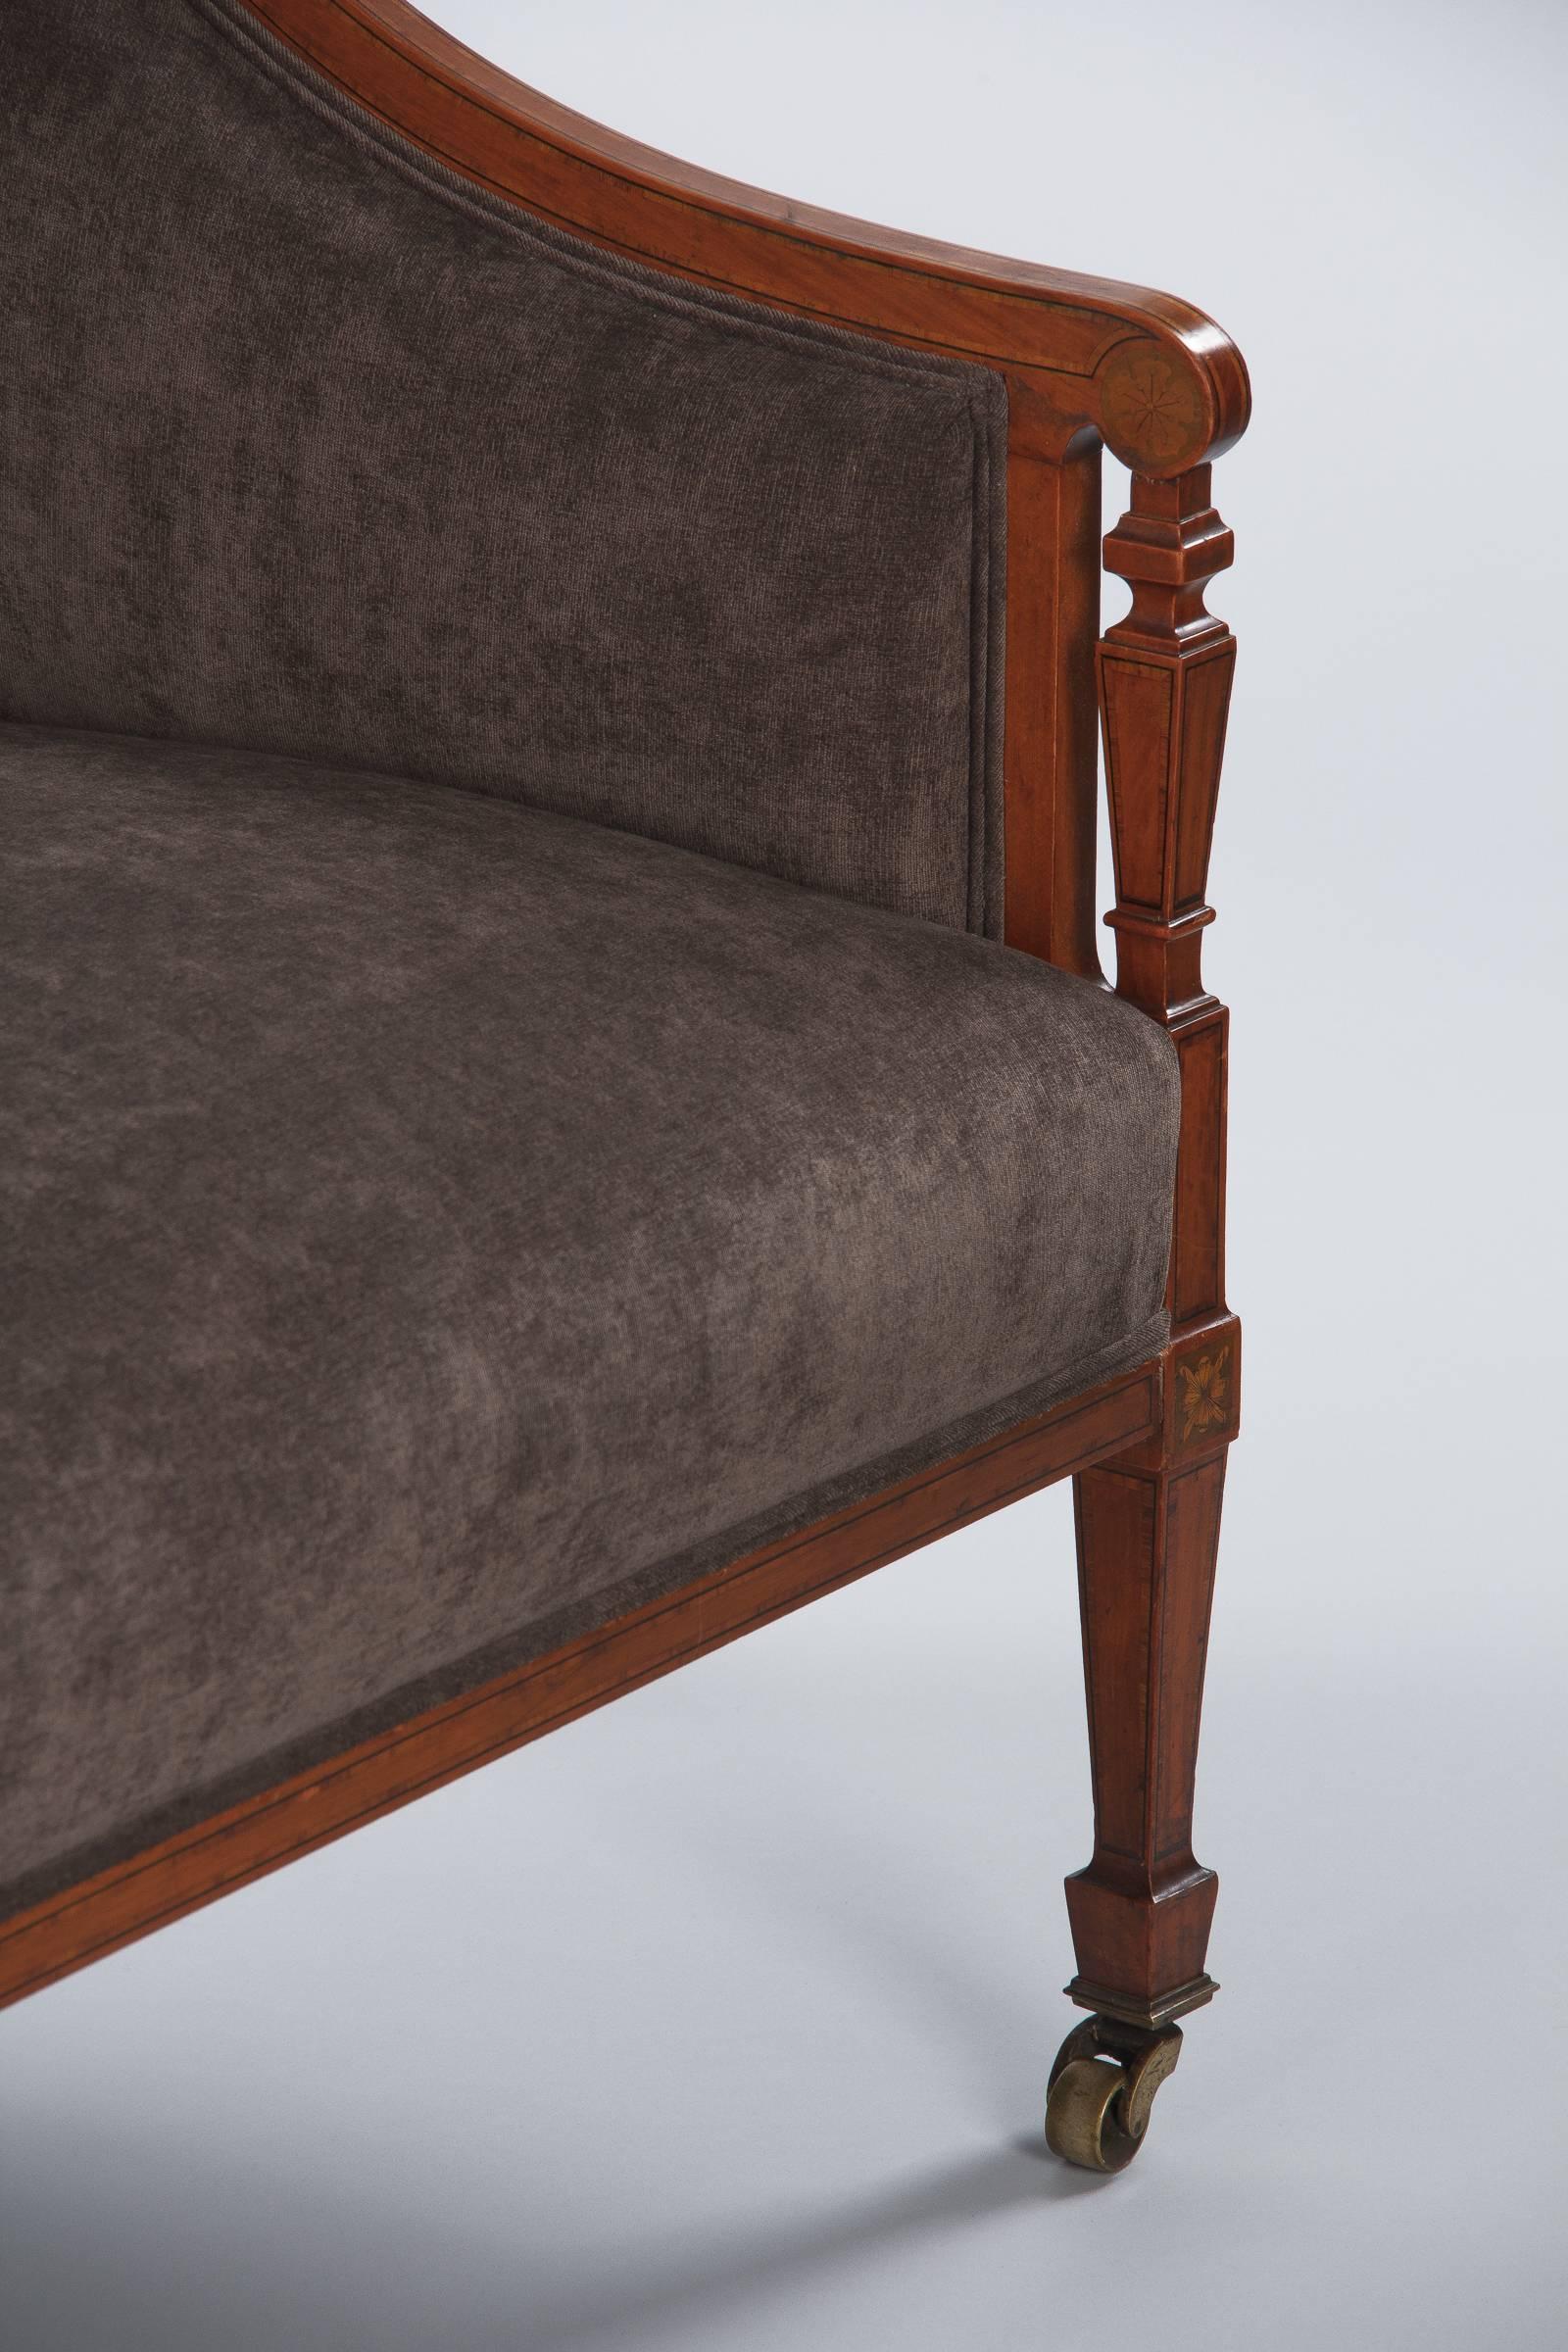 Ebony French Directoire Style Upholstered Sofa in Mahogany, Late 1800s